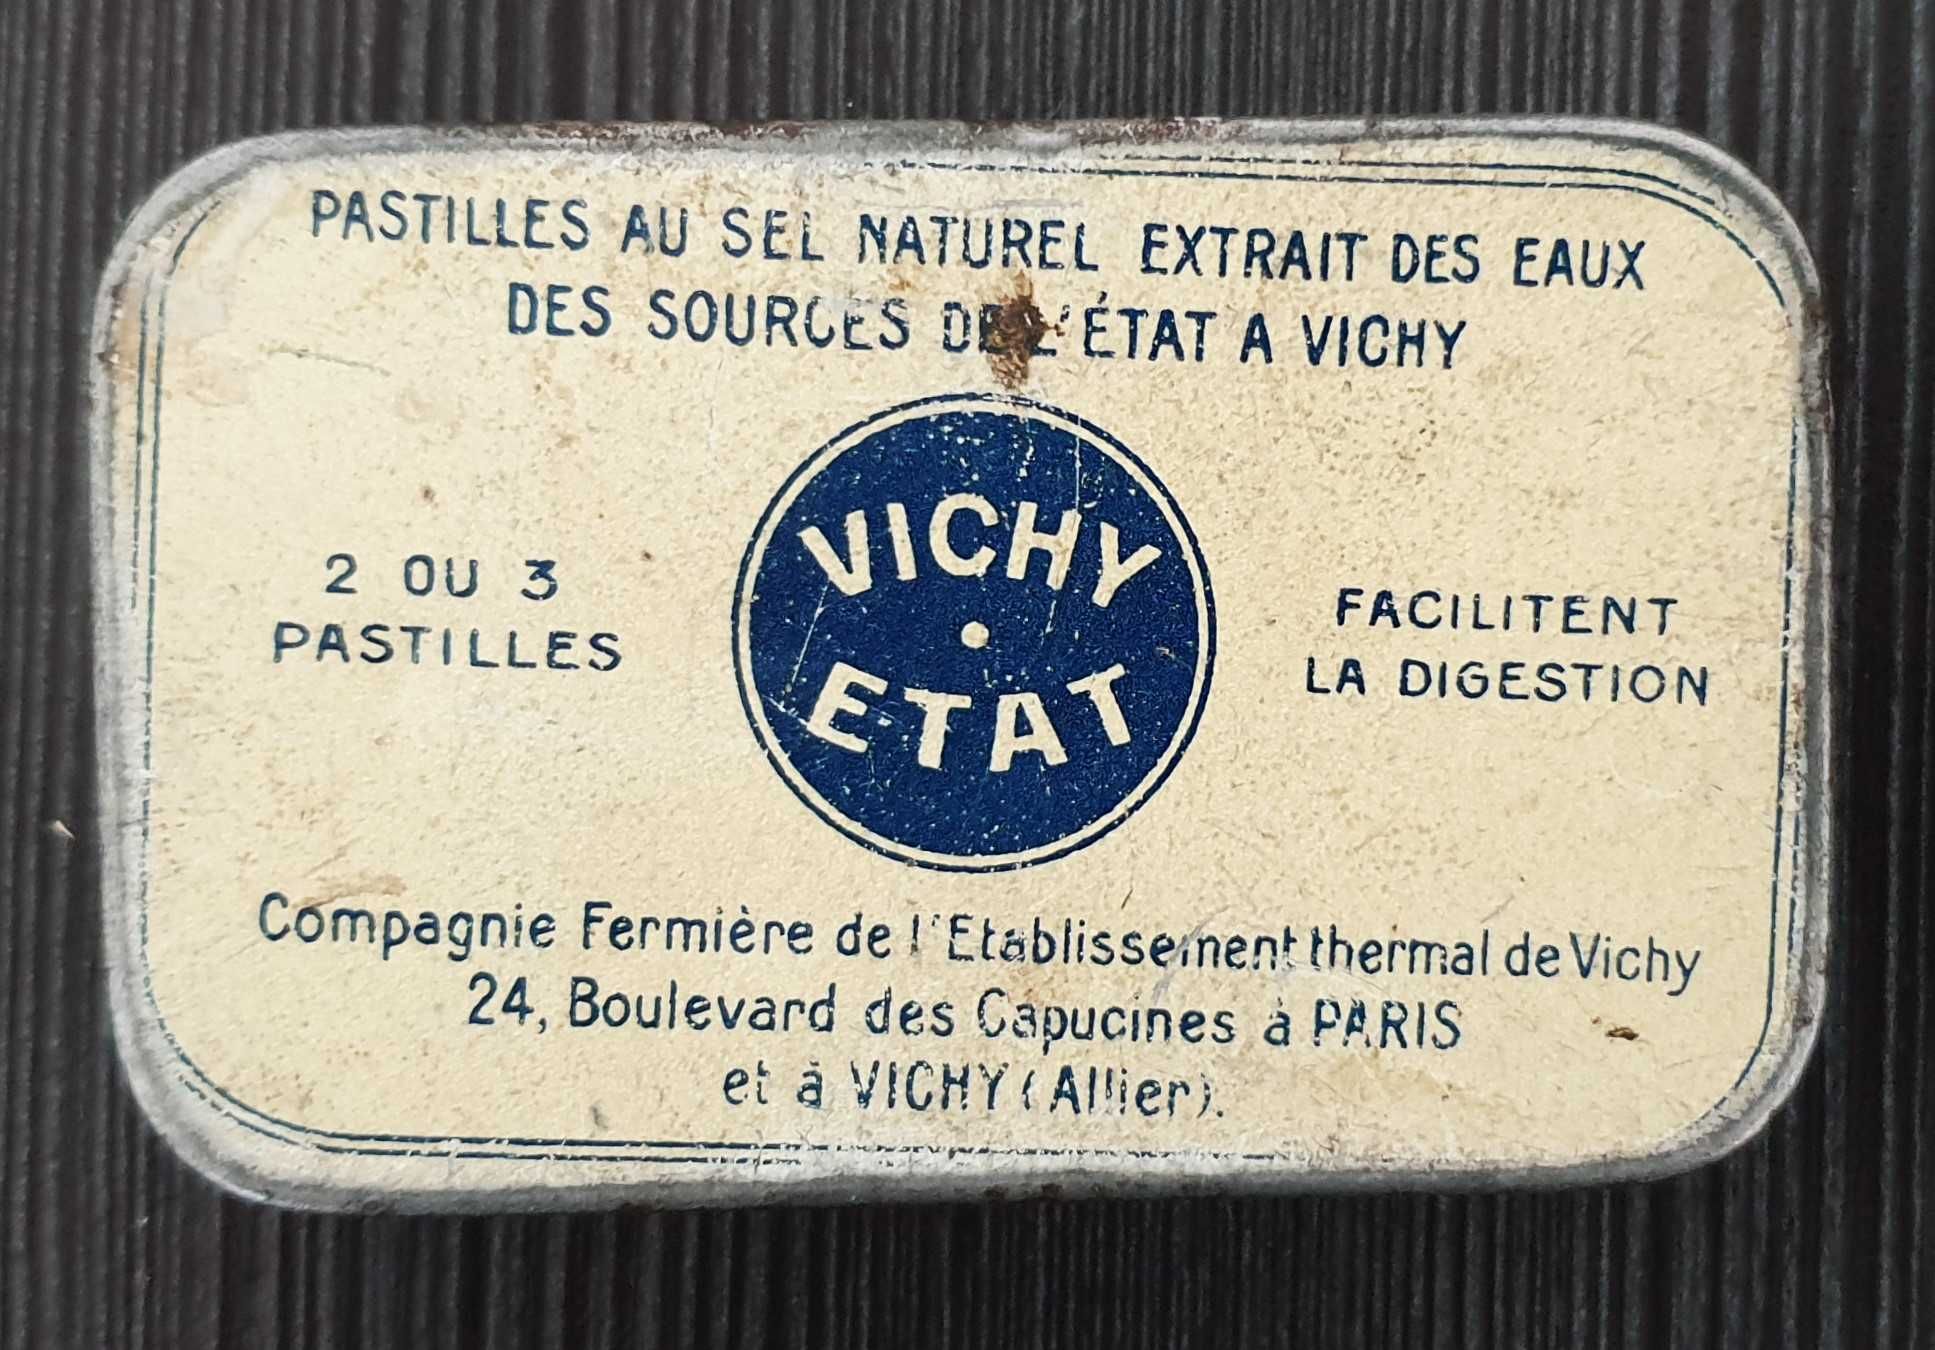 Metalowe opakowanie pastylek Vichy